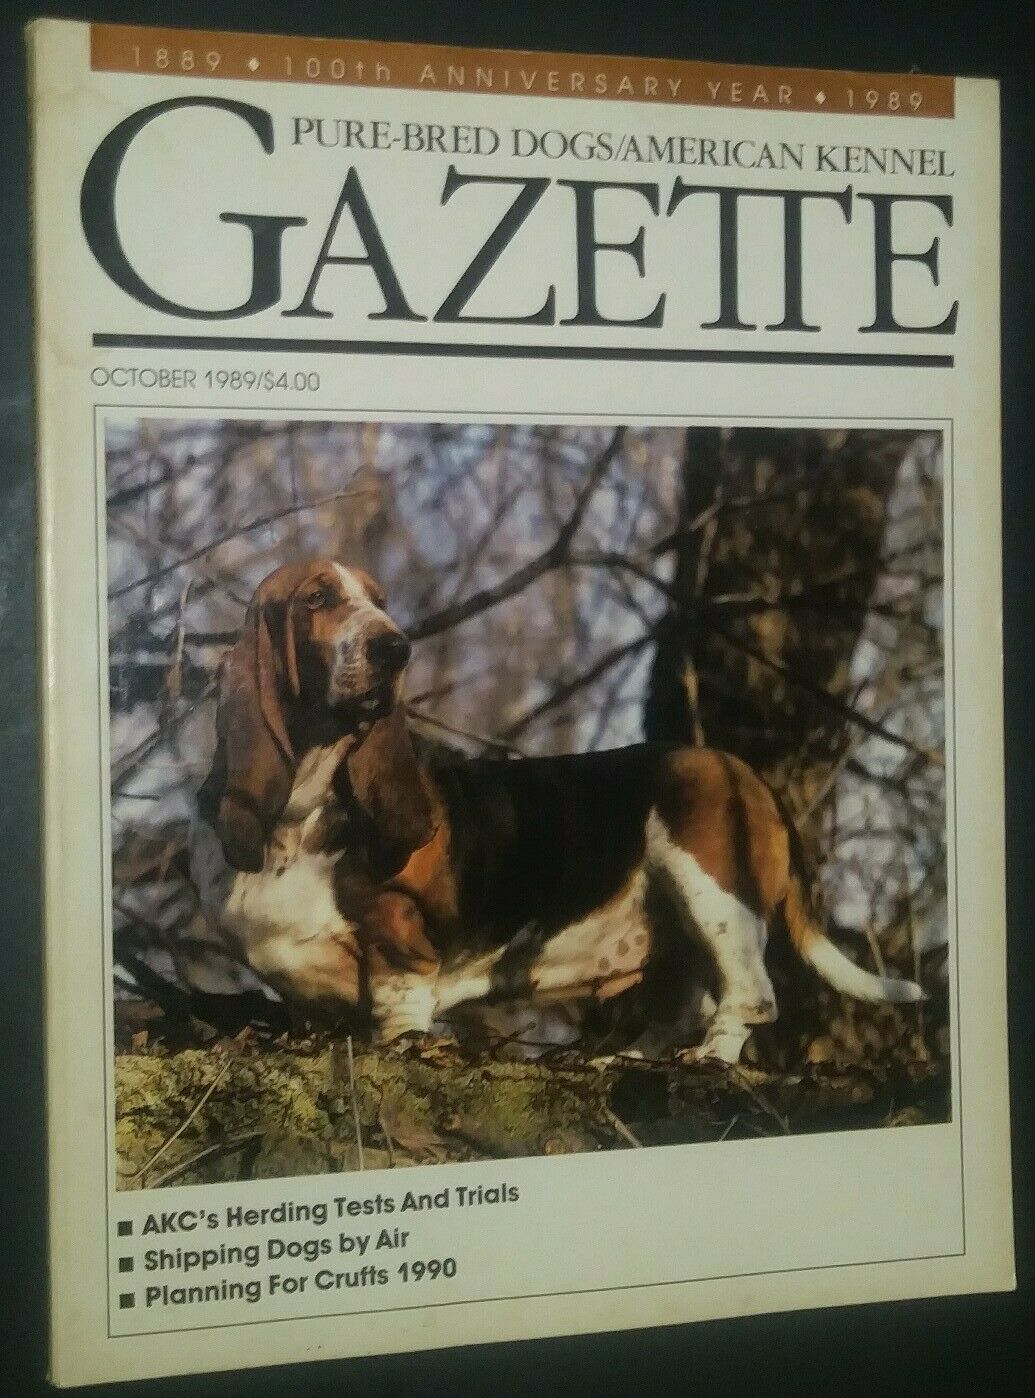 Purebred Dogs Akc Gazette Basset Hound Cover Oct. 1989